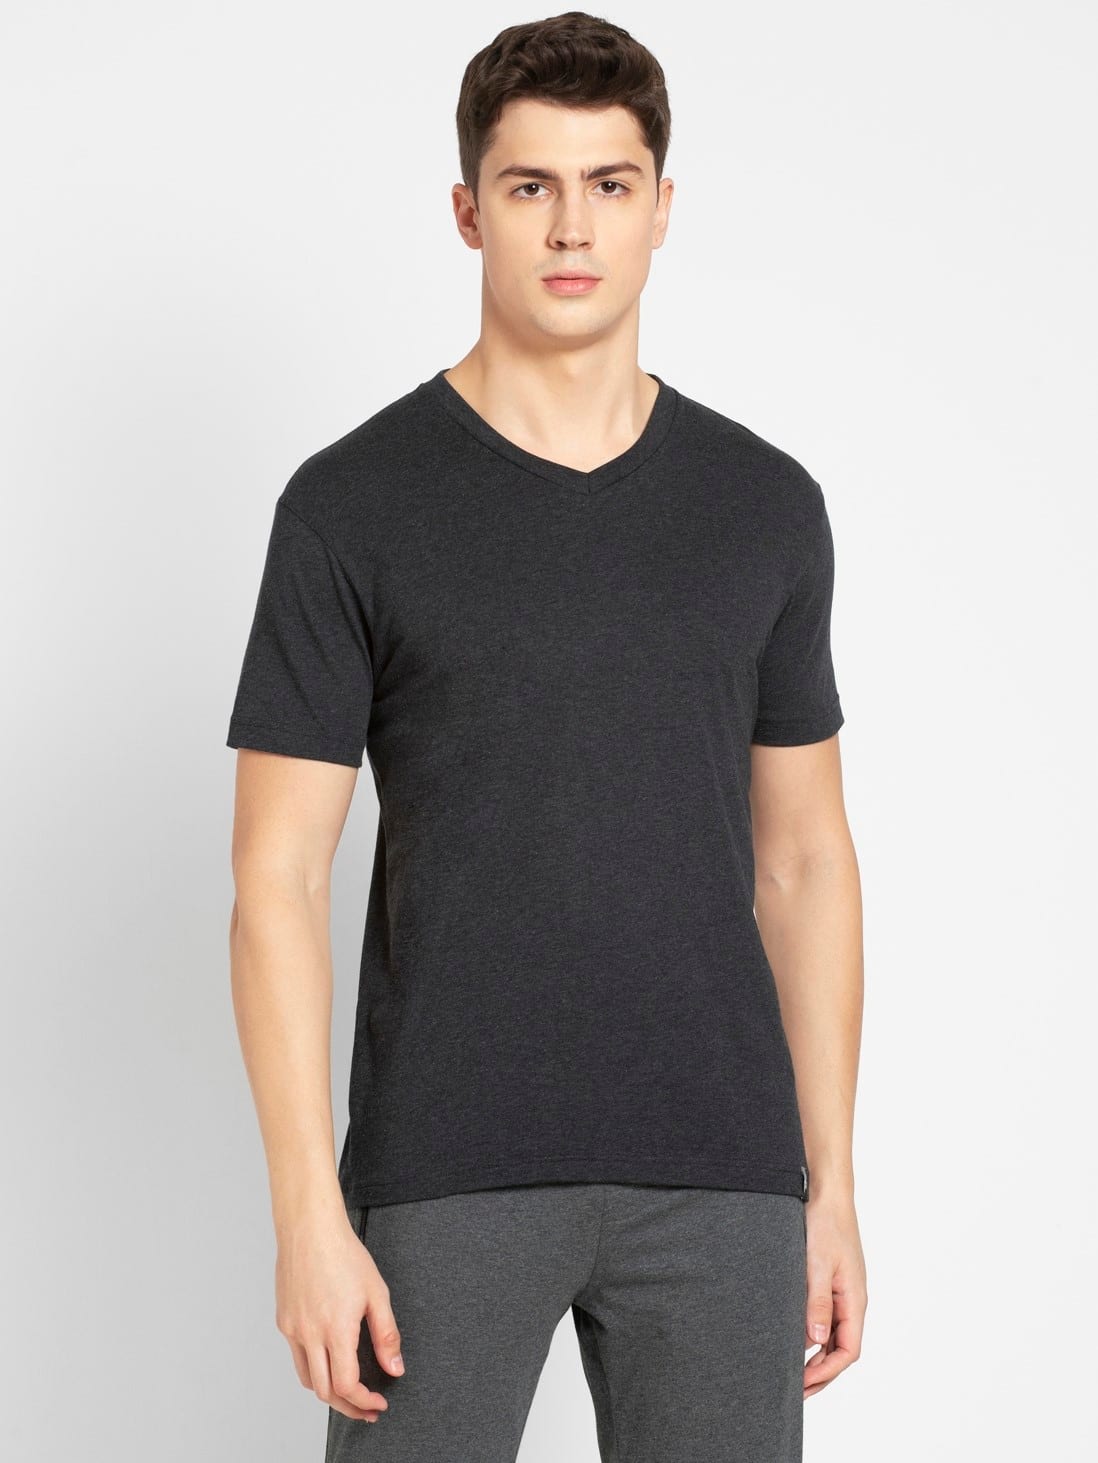 Men's Black Melange V-Neck T-shirt